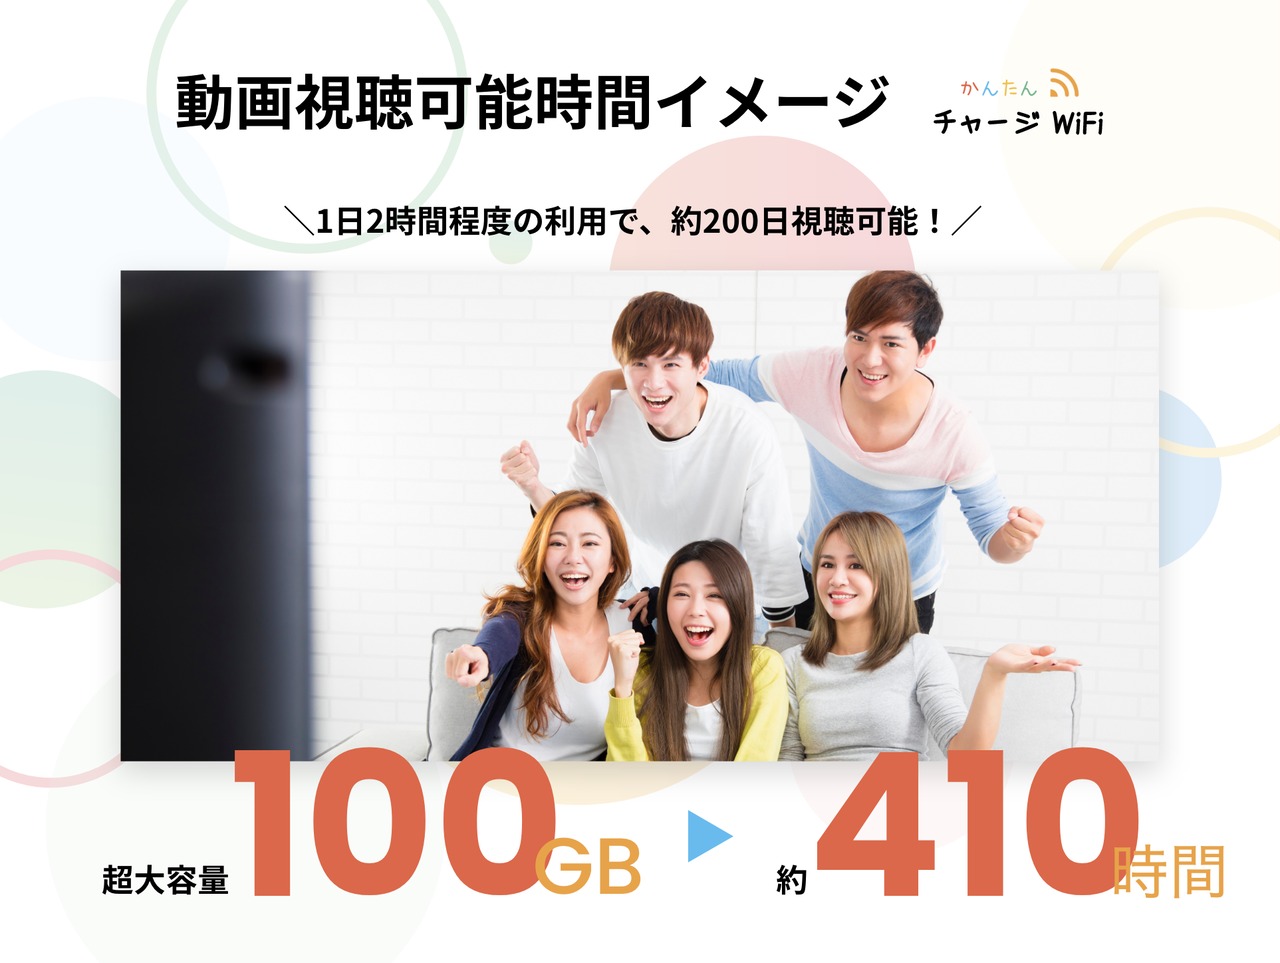 【60GB】容量チャージ（かんたんチャージWi-Fi専用）